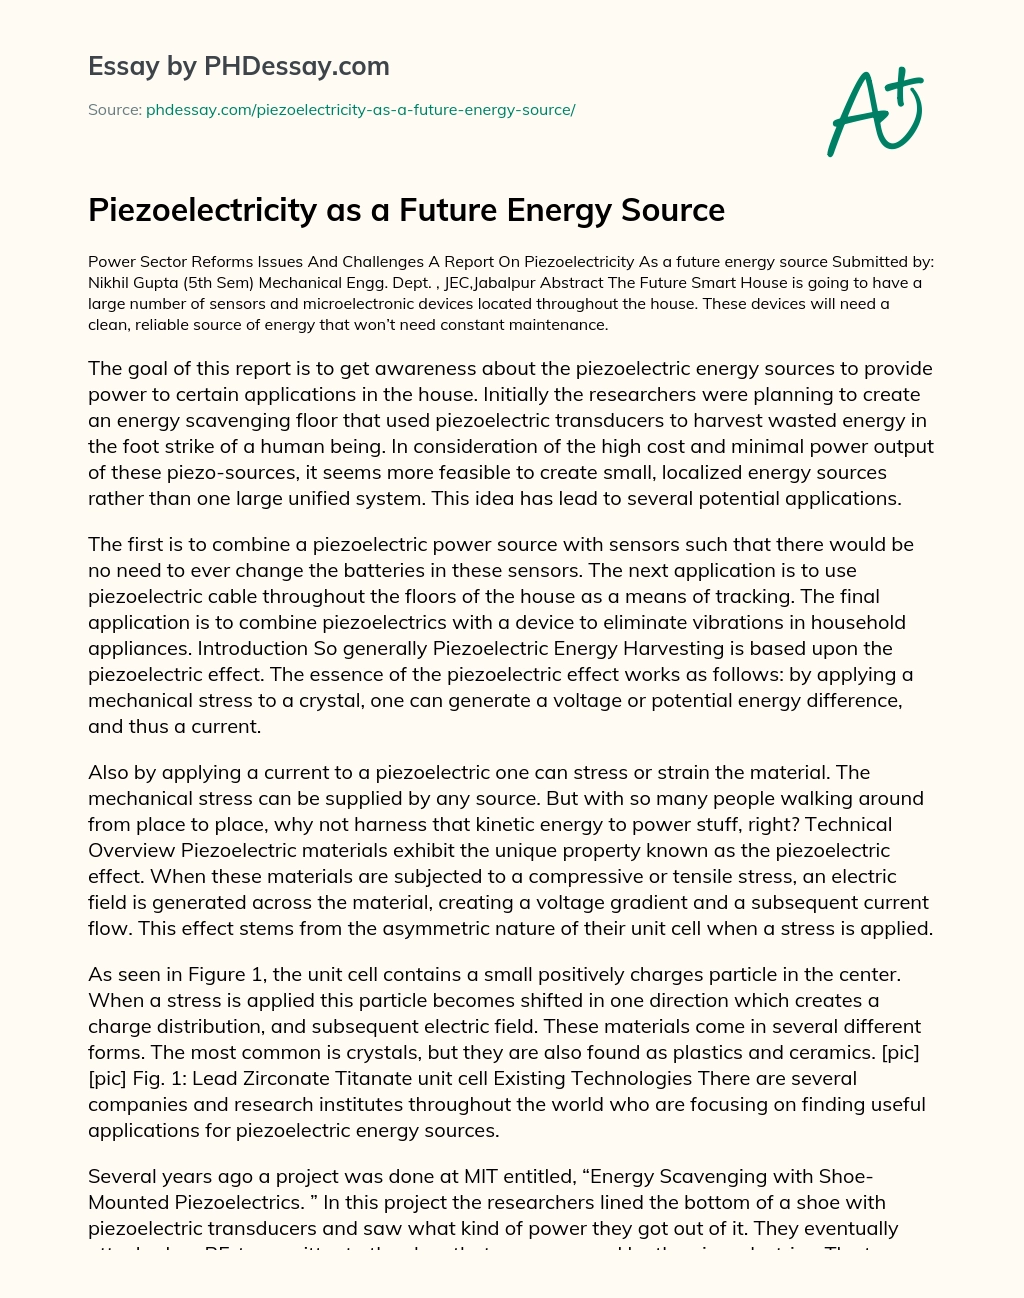 Piezoelectricity as a Future Energy Source essay